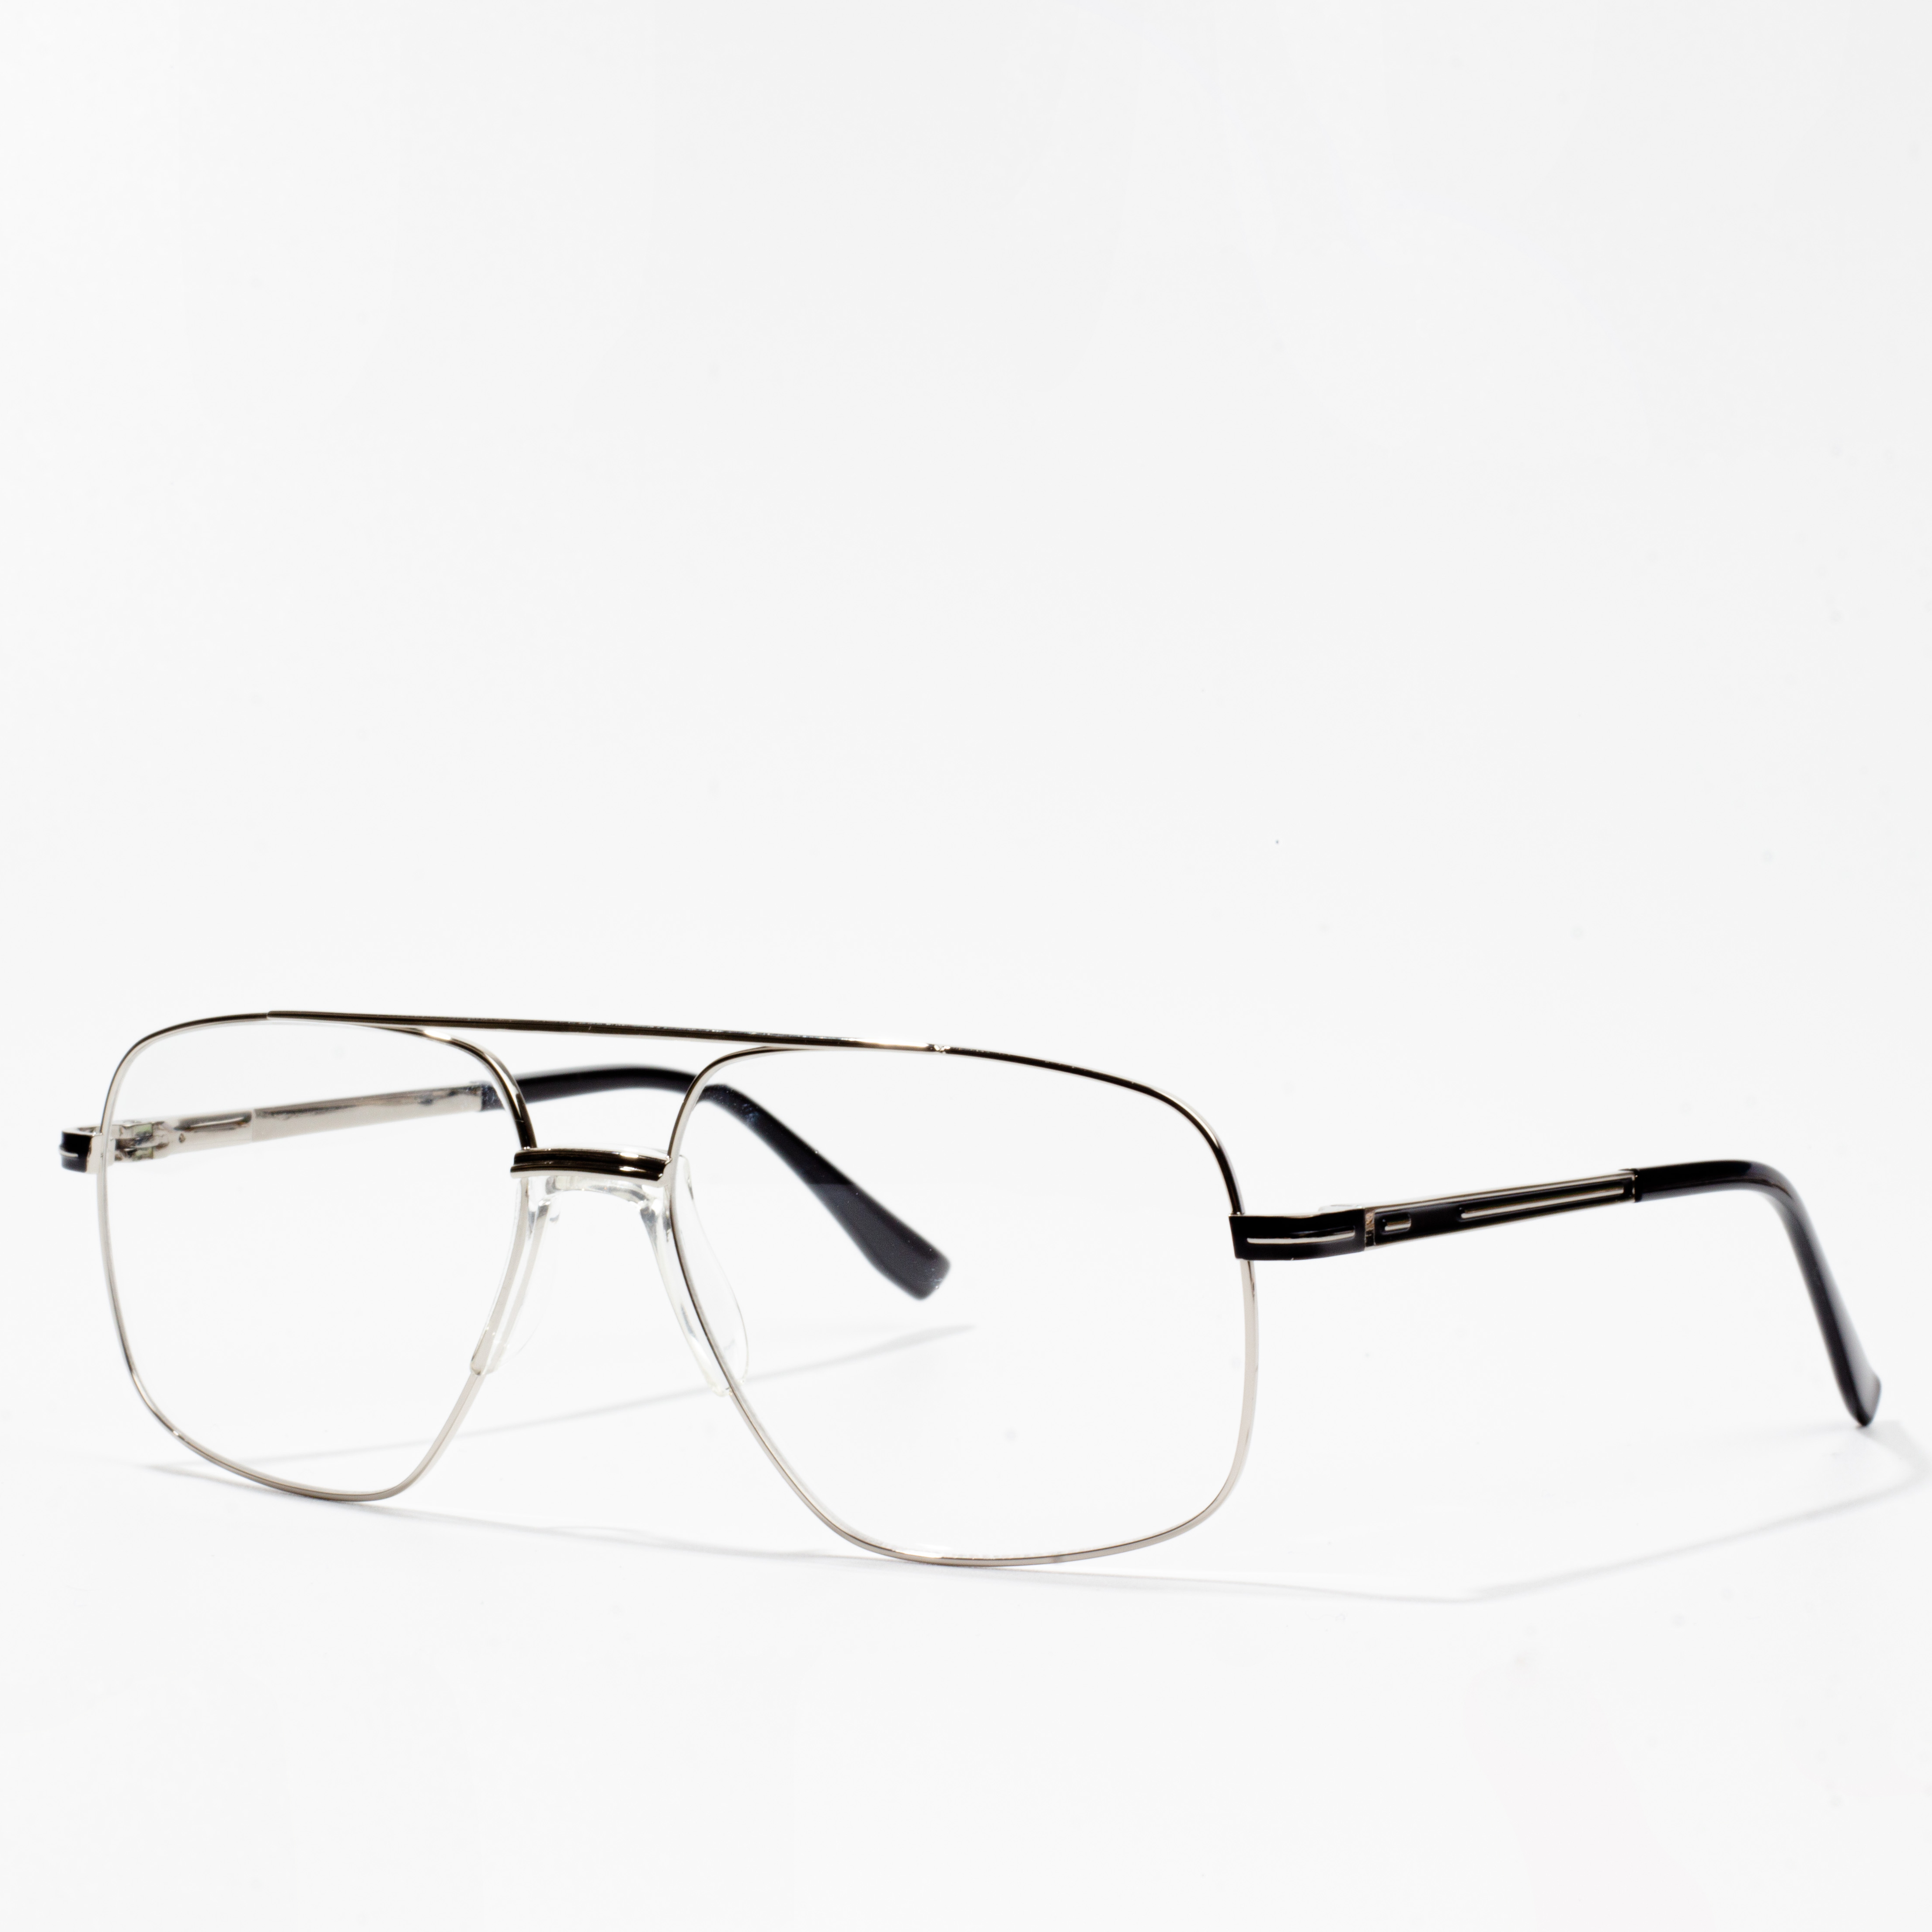 "frame kacamata fashion kab